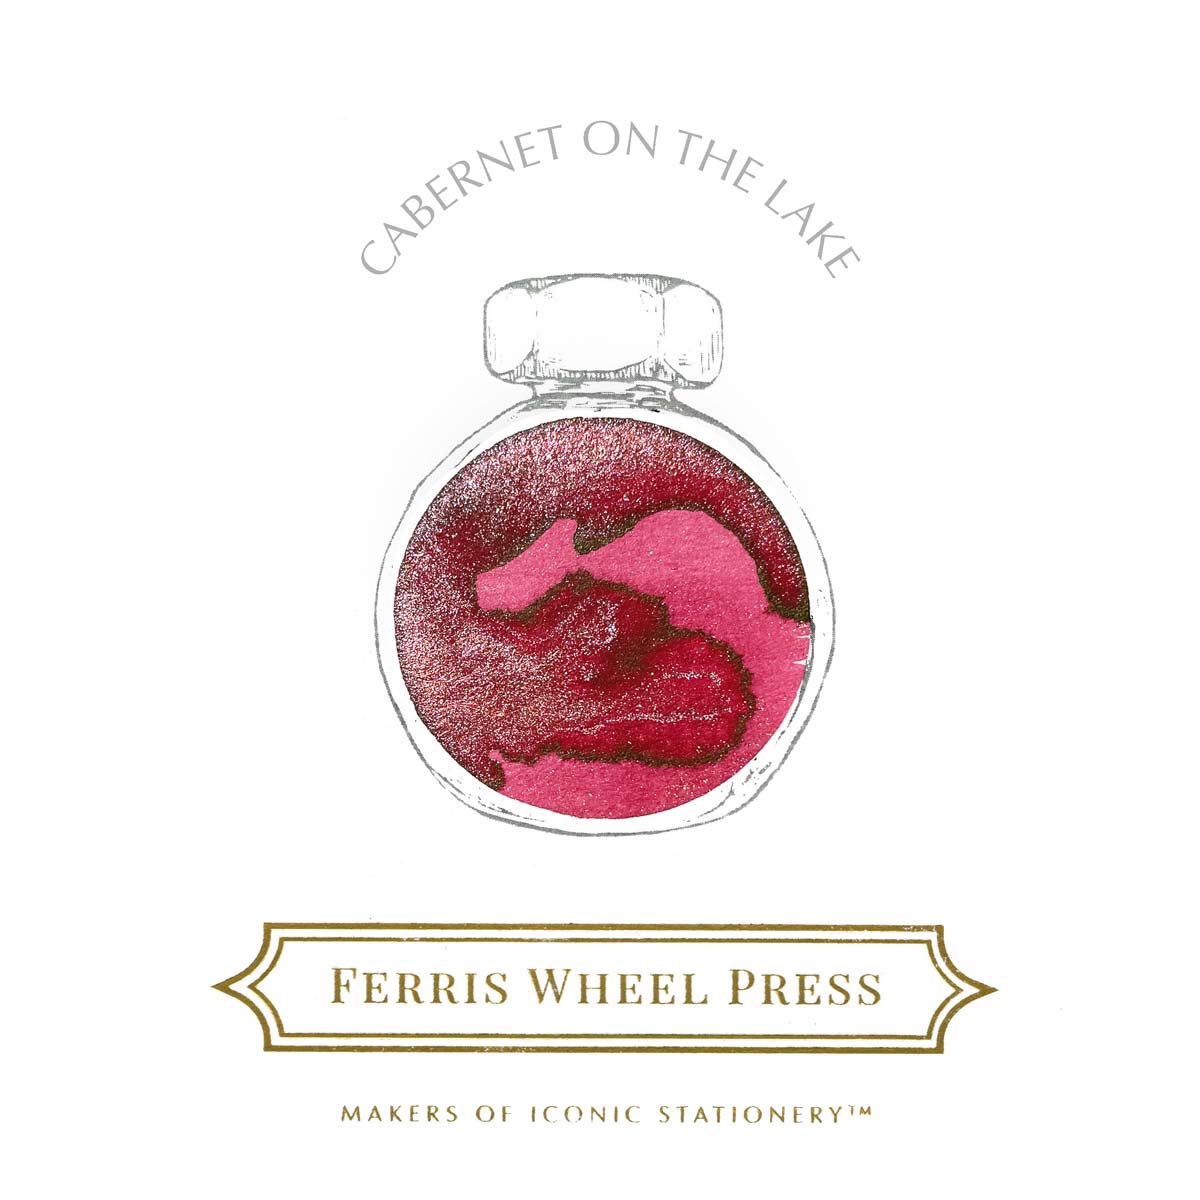 Ferris Wheel Press - Cabernet on the Lake, 38 ml